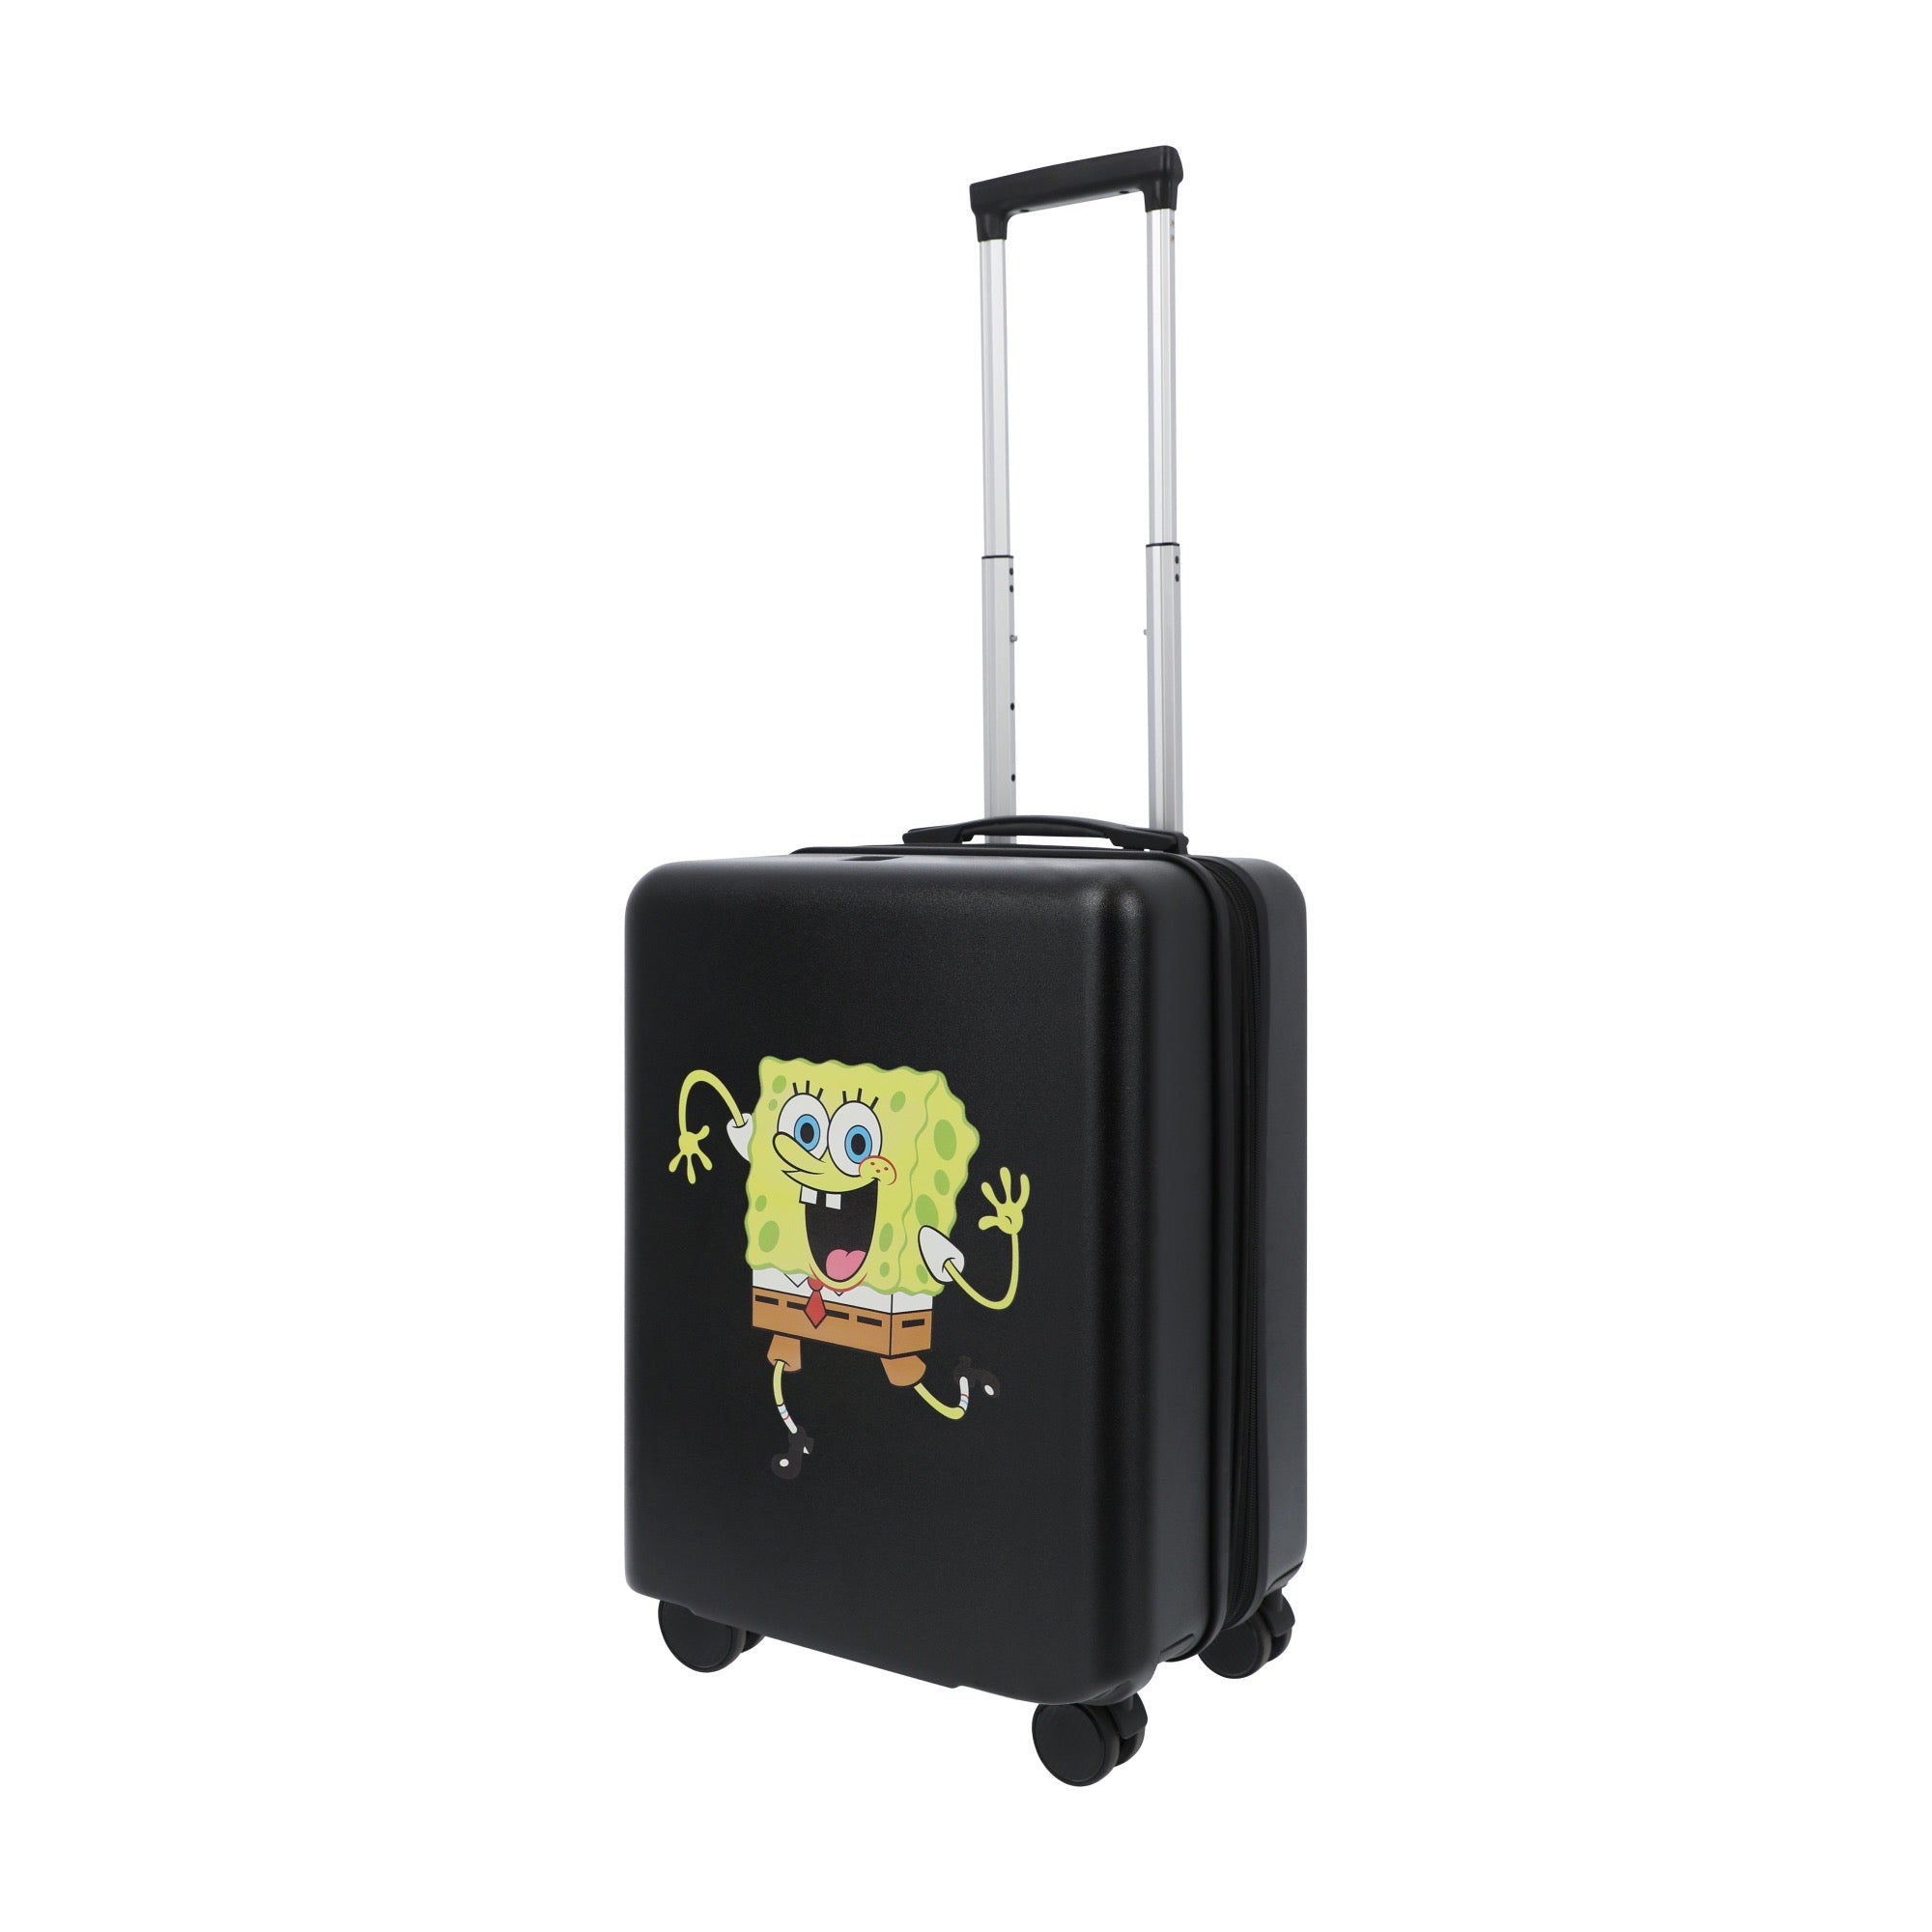 Nickelodeon SpongeBob squarepants 22.5" black carry-on spinner suitcase luggage by Ful